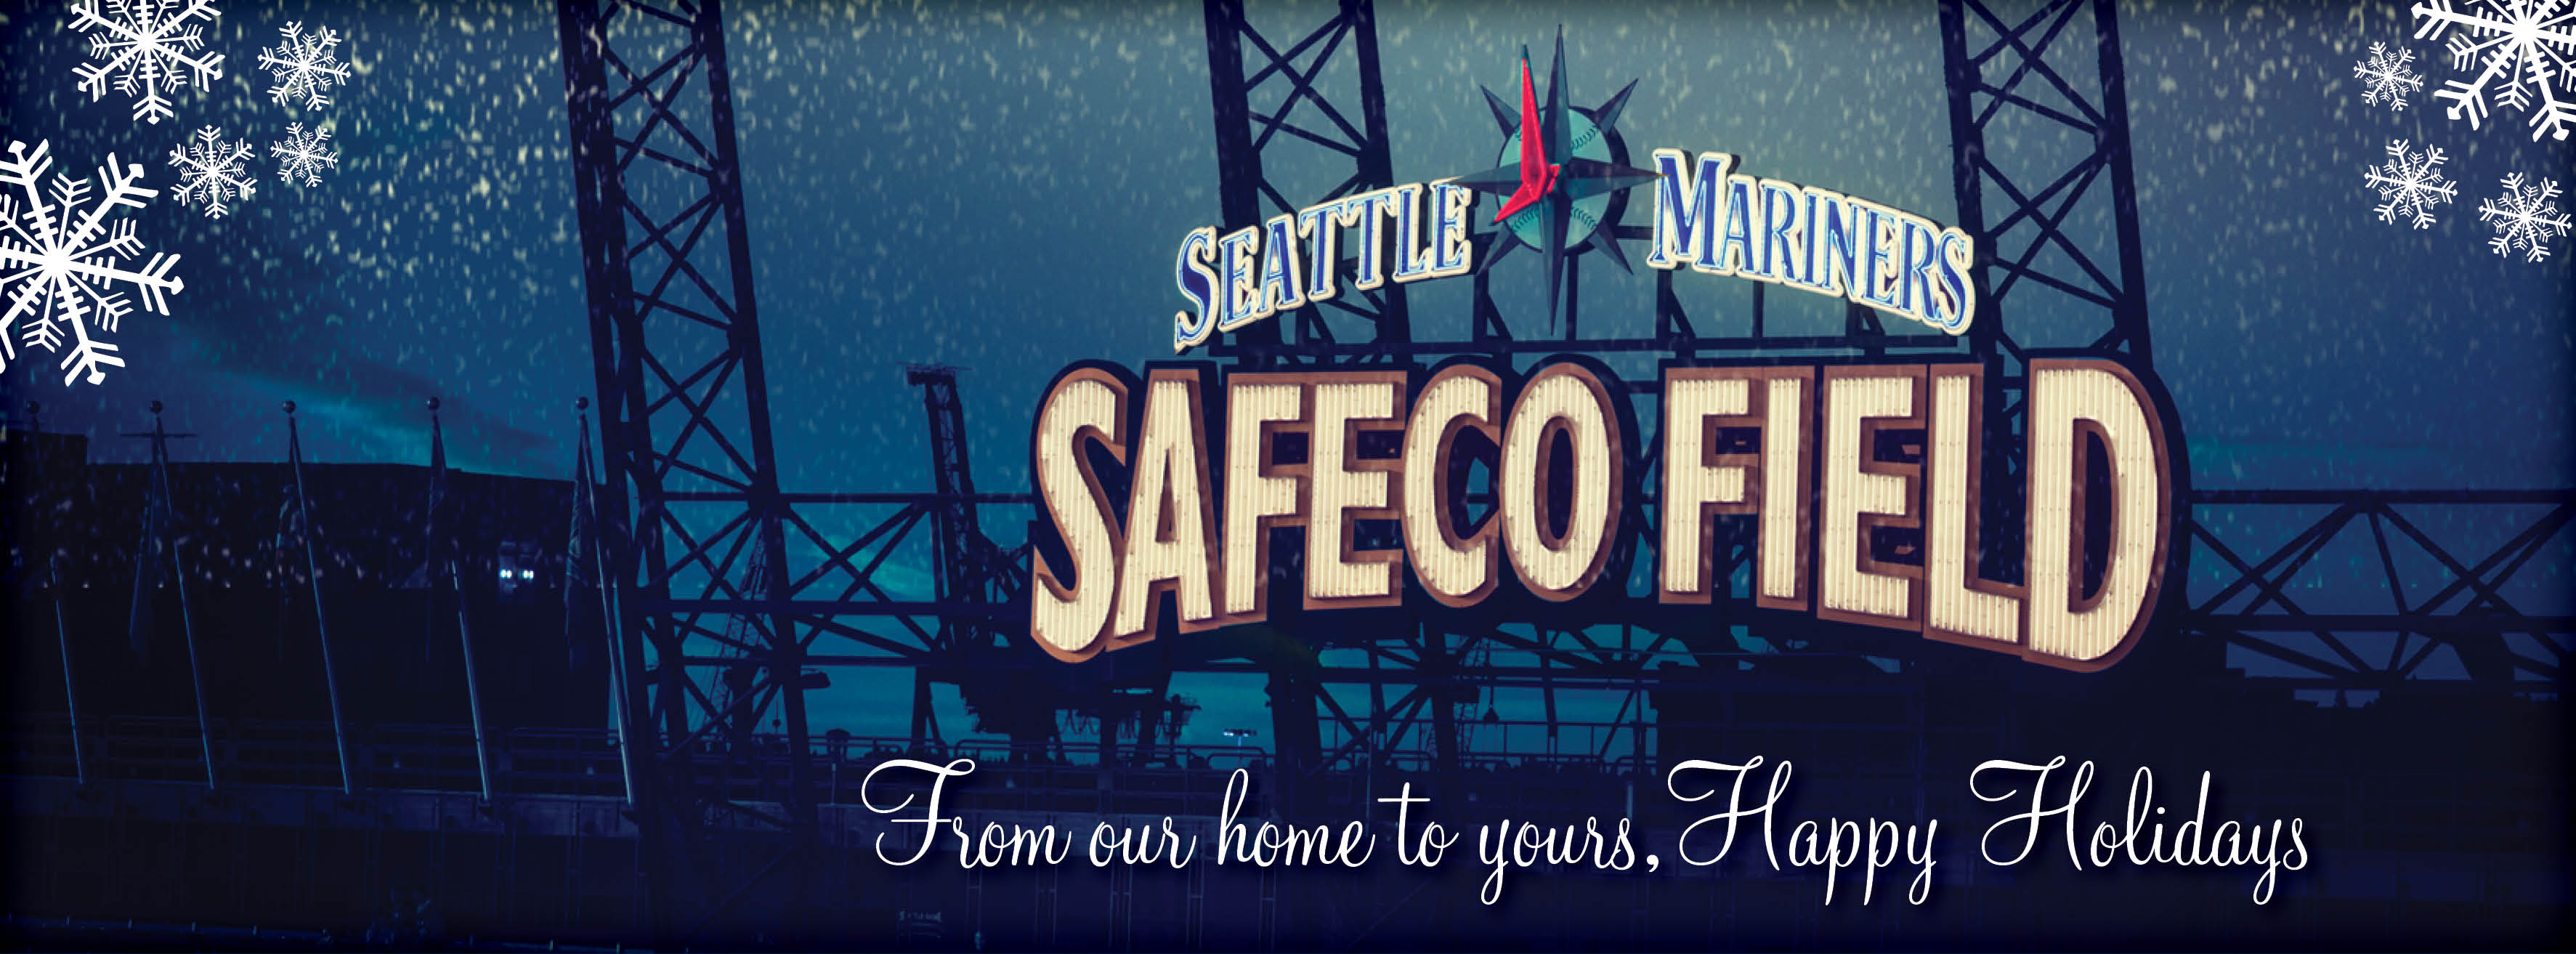 Seattle Mariners Safeco Stadium Baseball Mlb Wallpaper